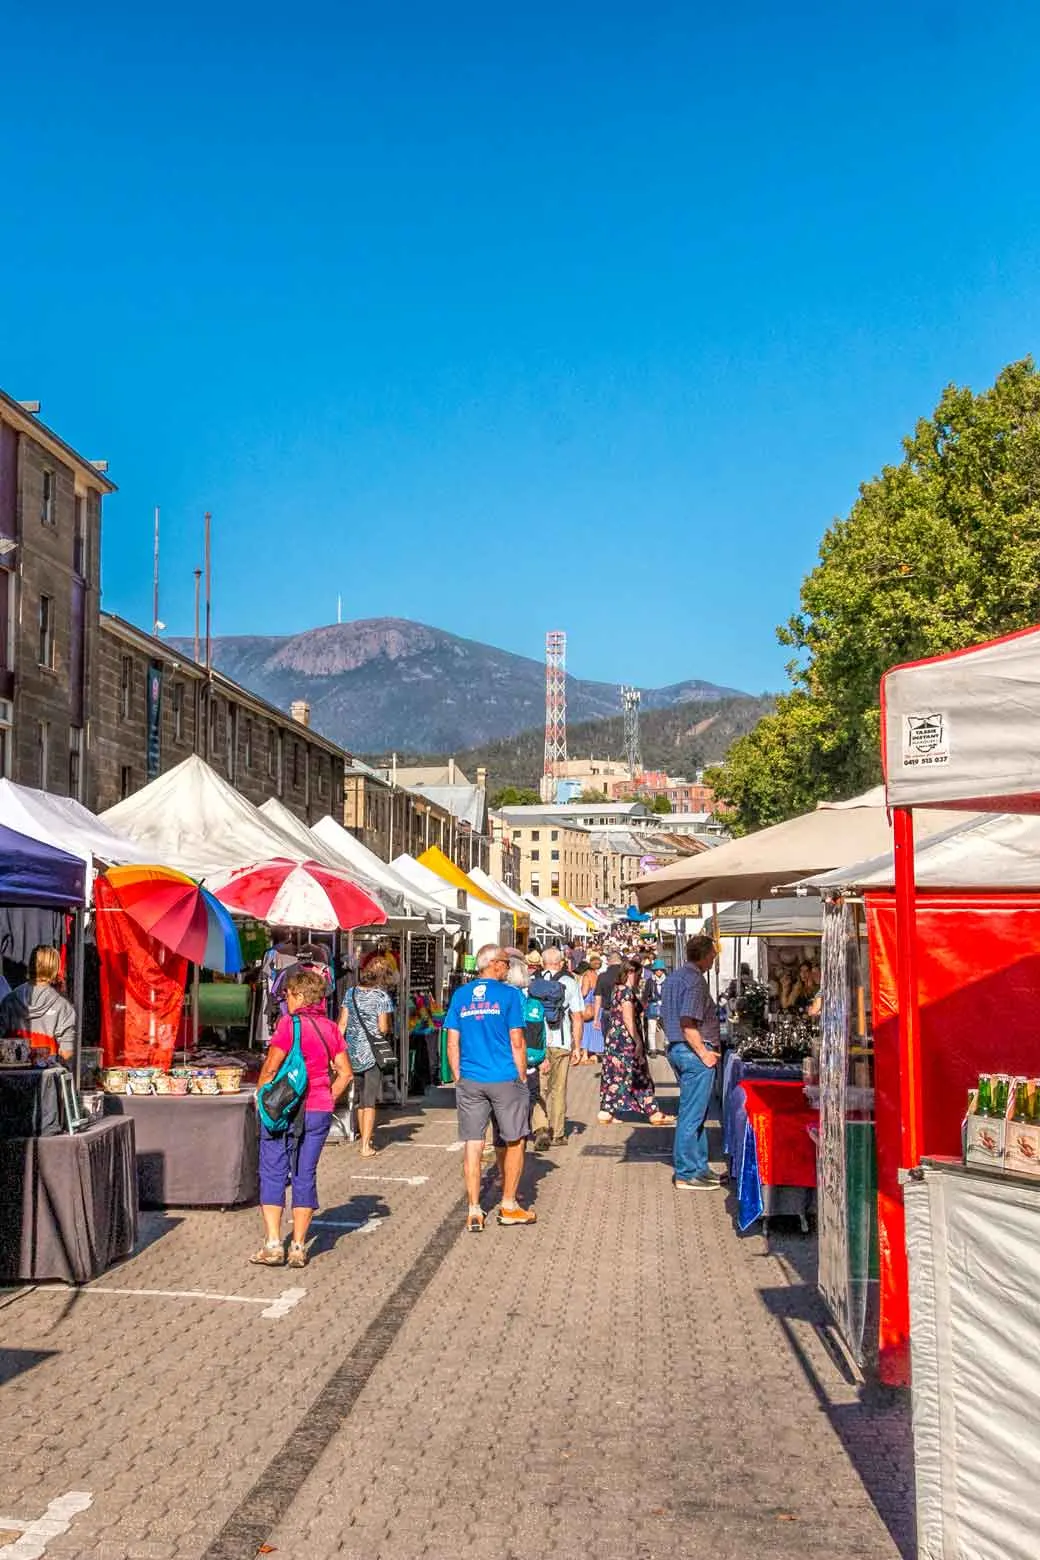 Salamanca - one of the best Hobart markets